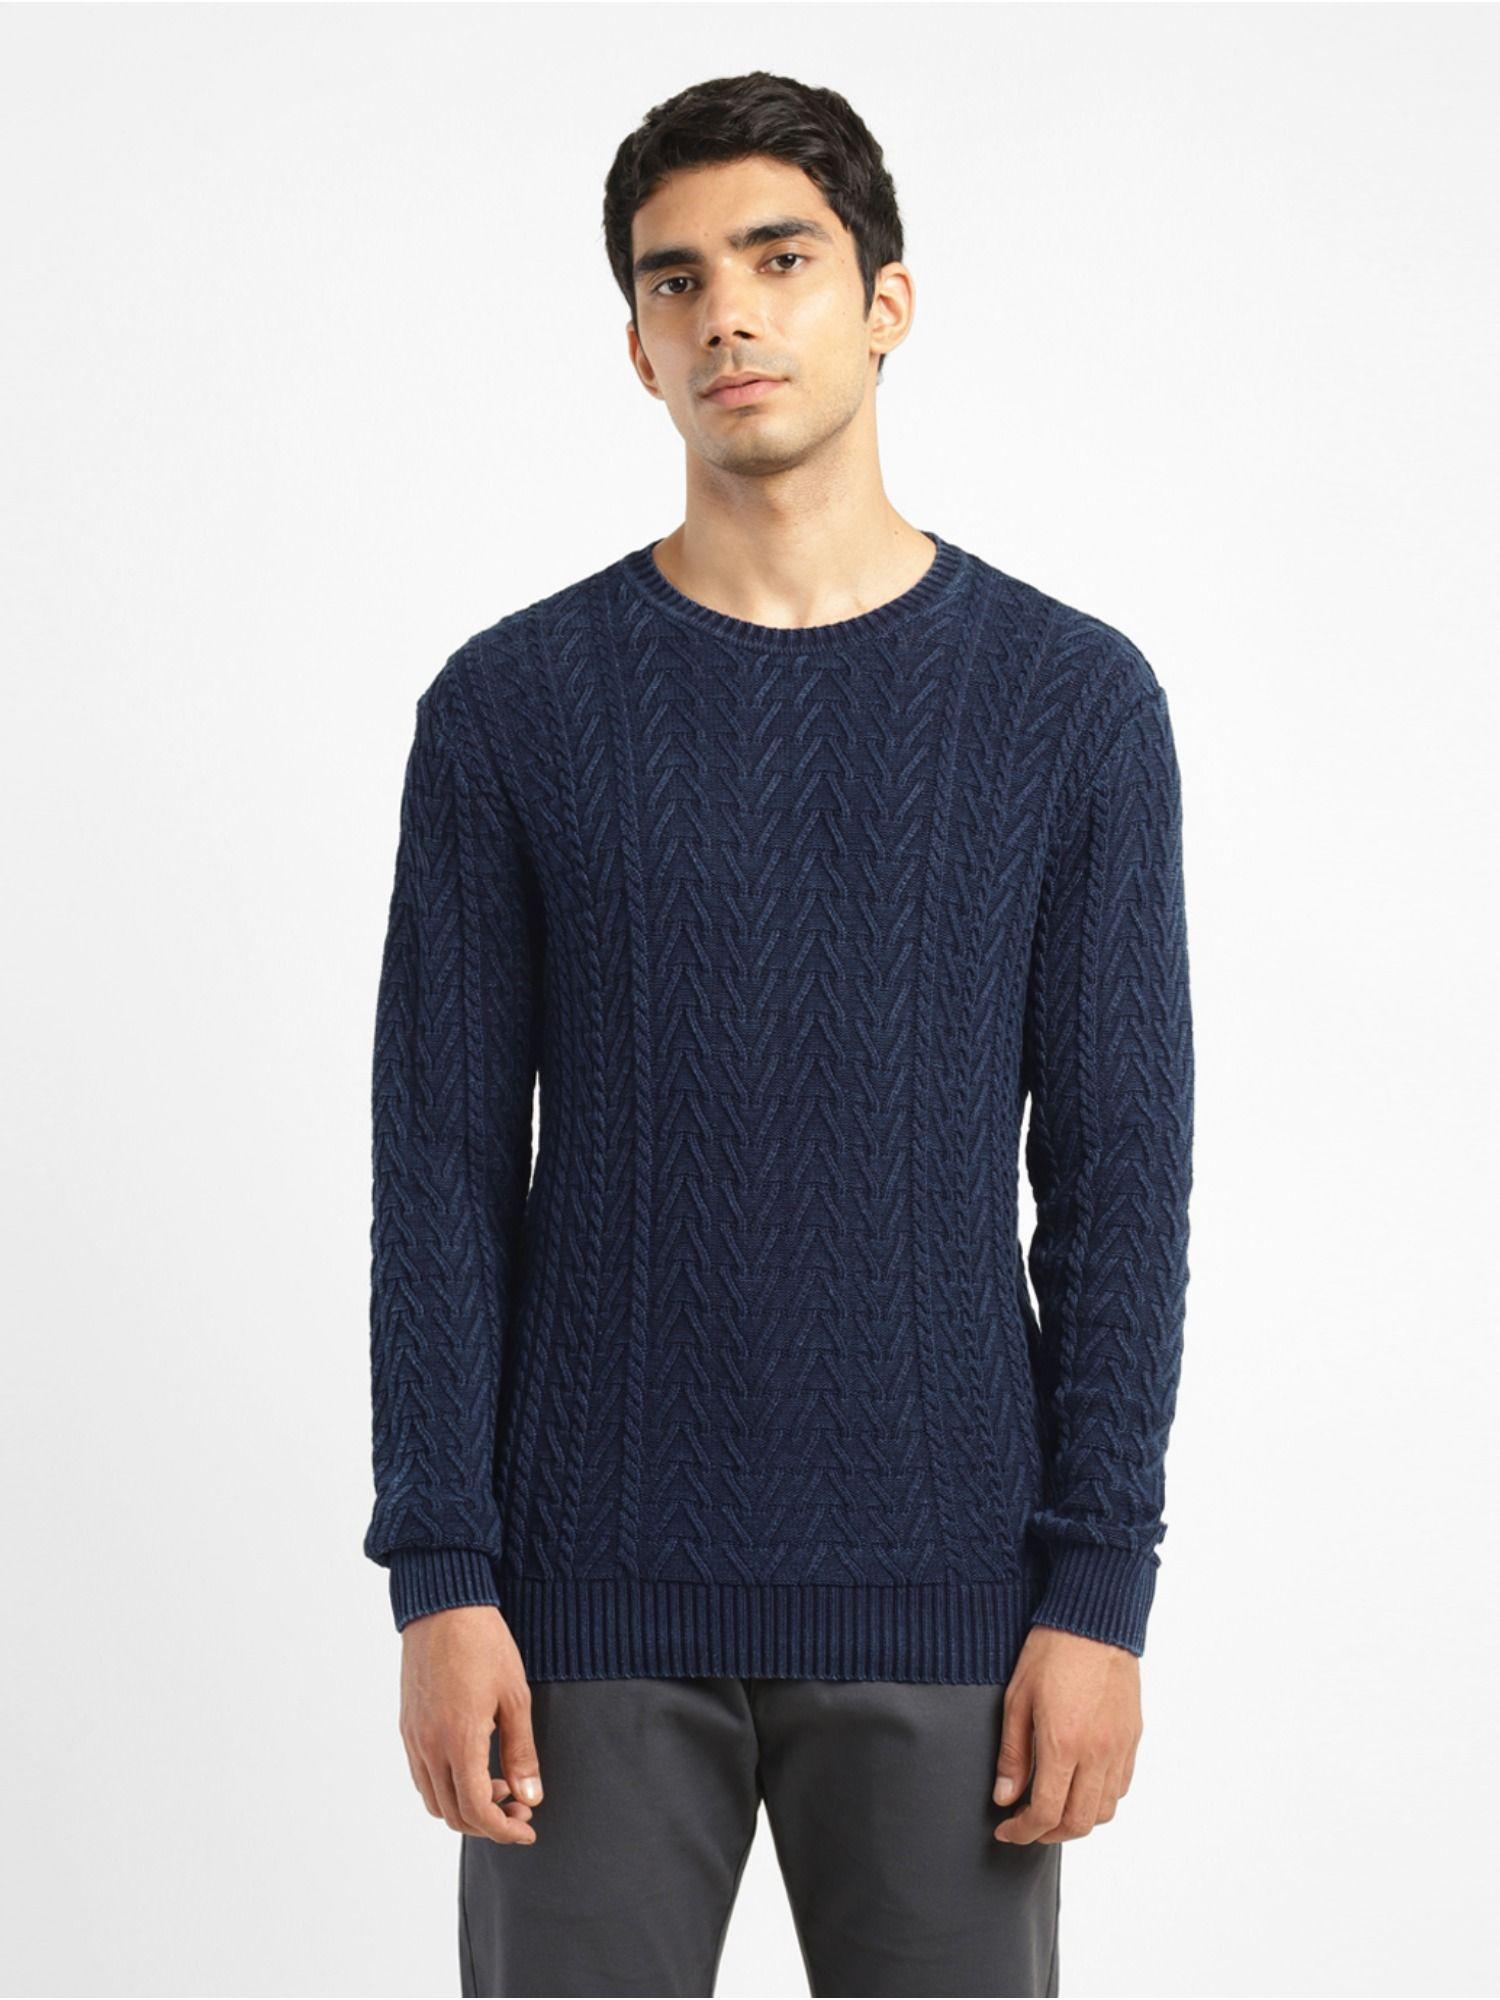 men's-textured-navy-blue-crew-neck-sweater